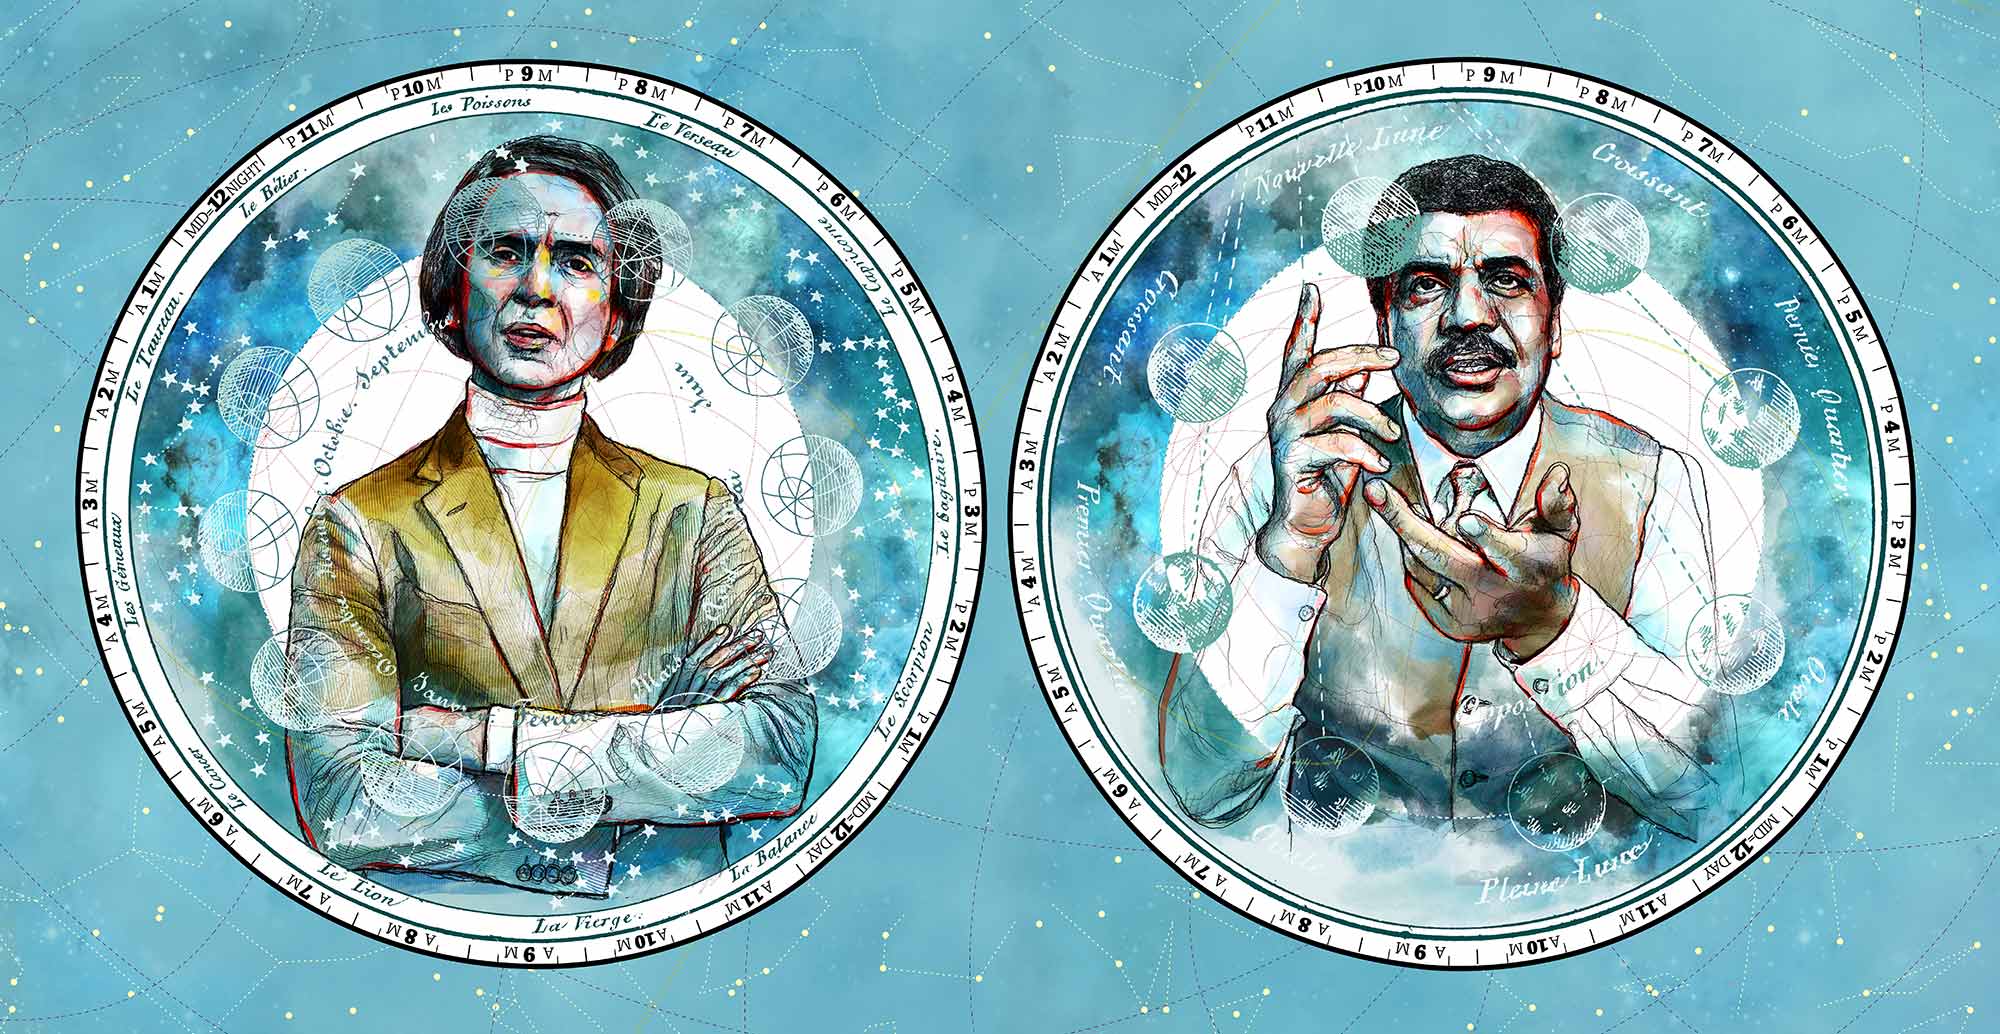 Mario Jodra illustration Art - Cosmos: Carl Sagan and Neil deGrasse Tyson